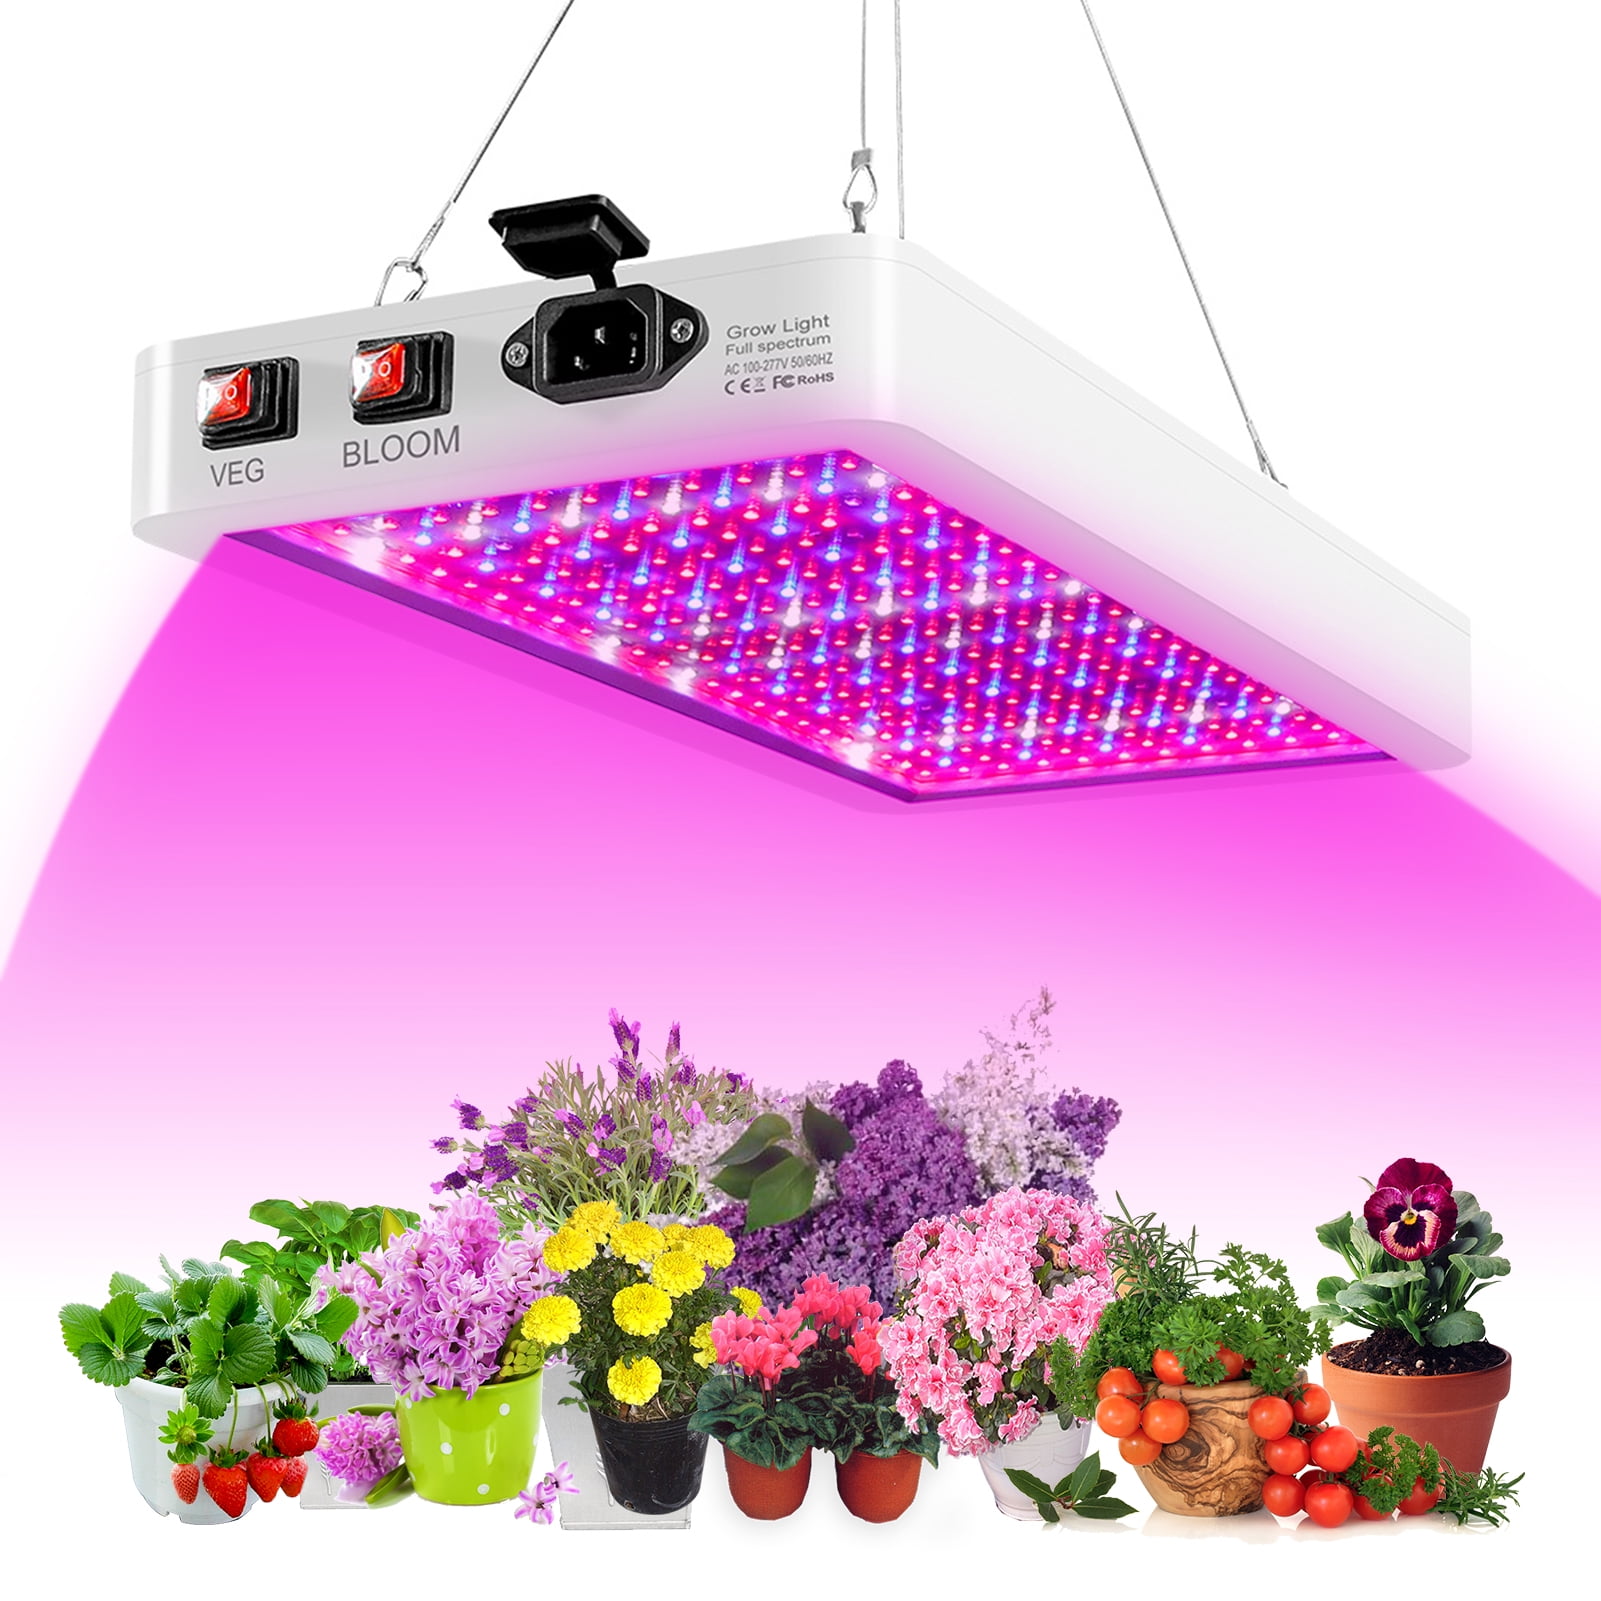 Led Grow Light,1000w grow light full spectrum Plant Light with Bloom and Veg Swi 